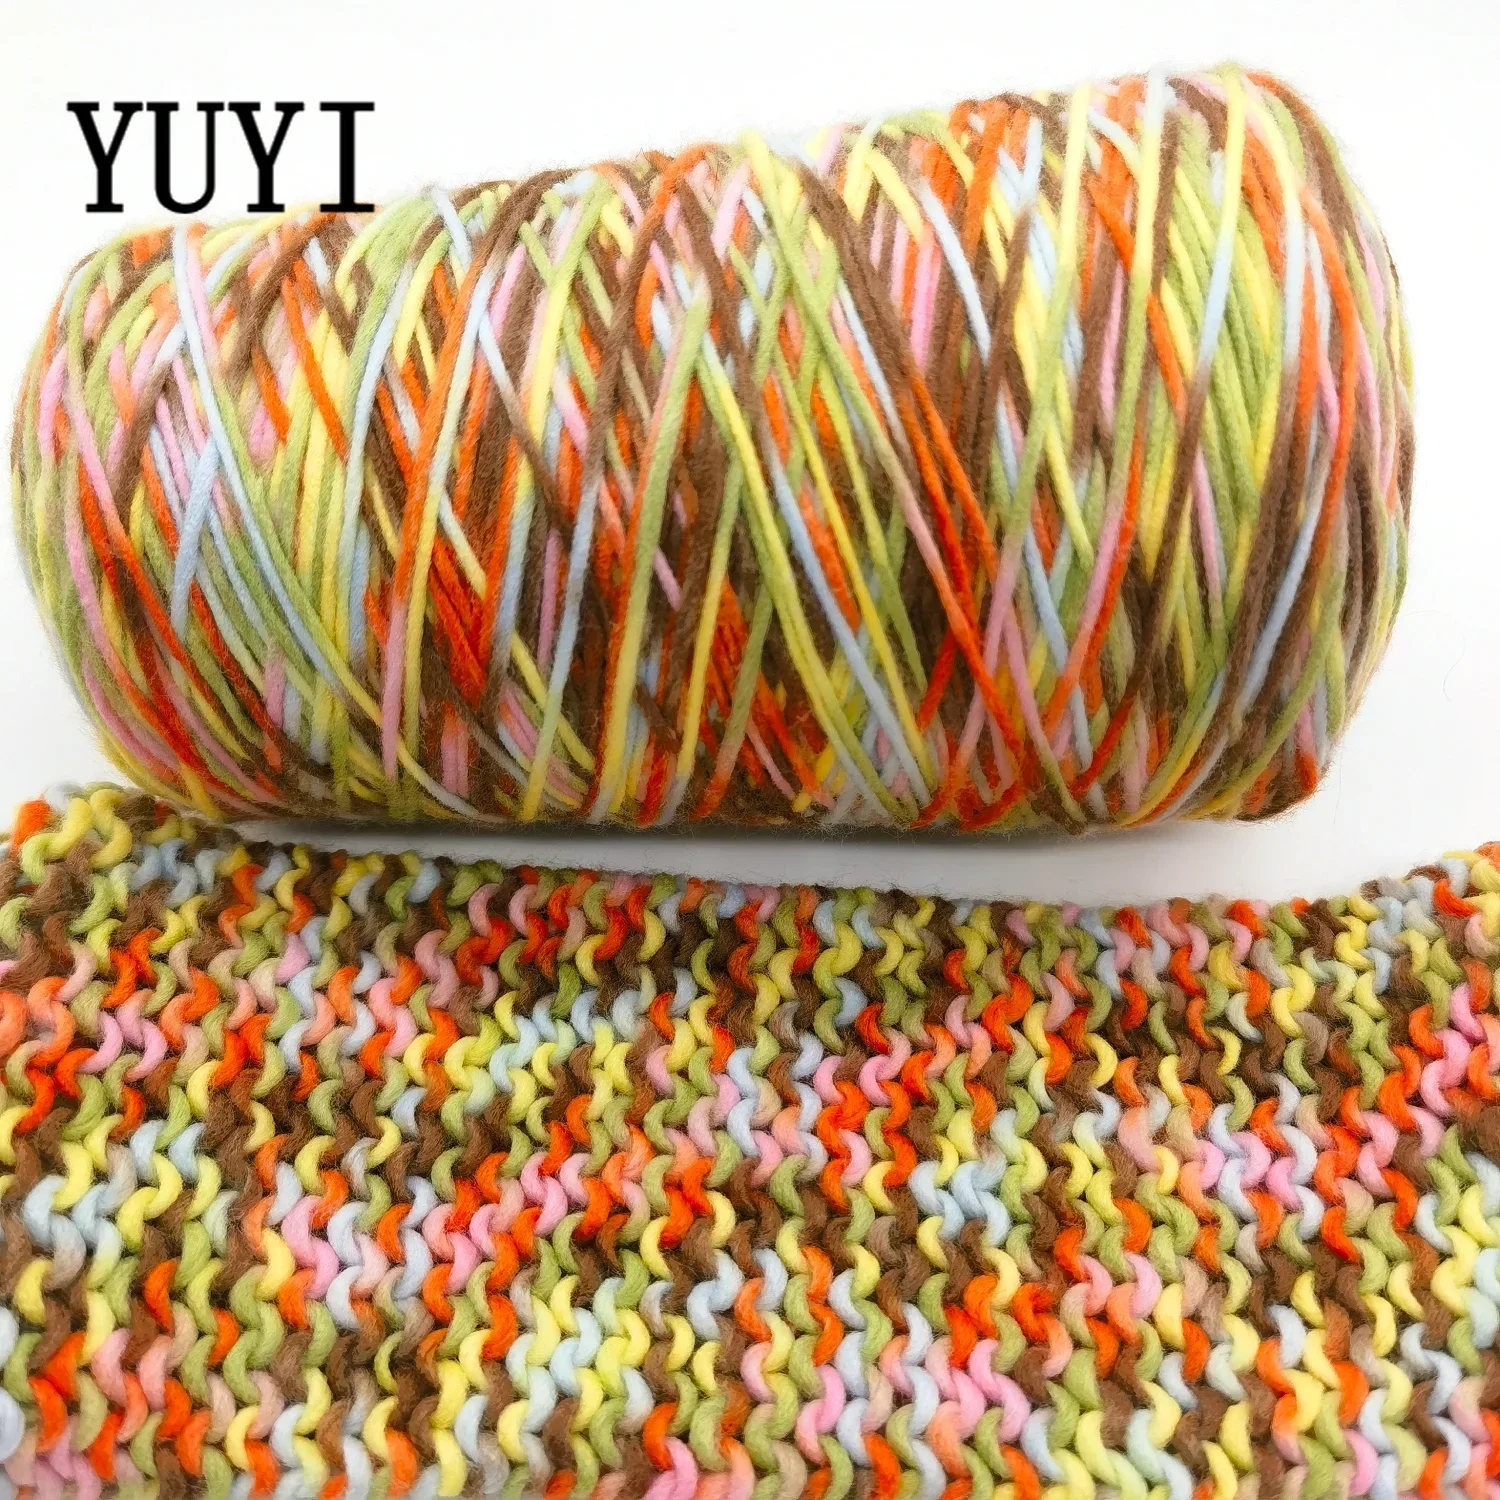 

YUYI 250g Chunky Blanket Knitting Rainbow Yarn Luxury Thick Polyester Jumbo Weaving Crochet Craft Yarns for Throw